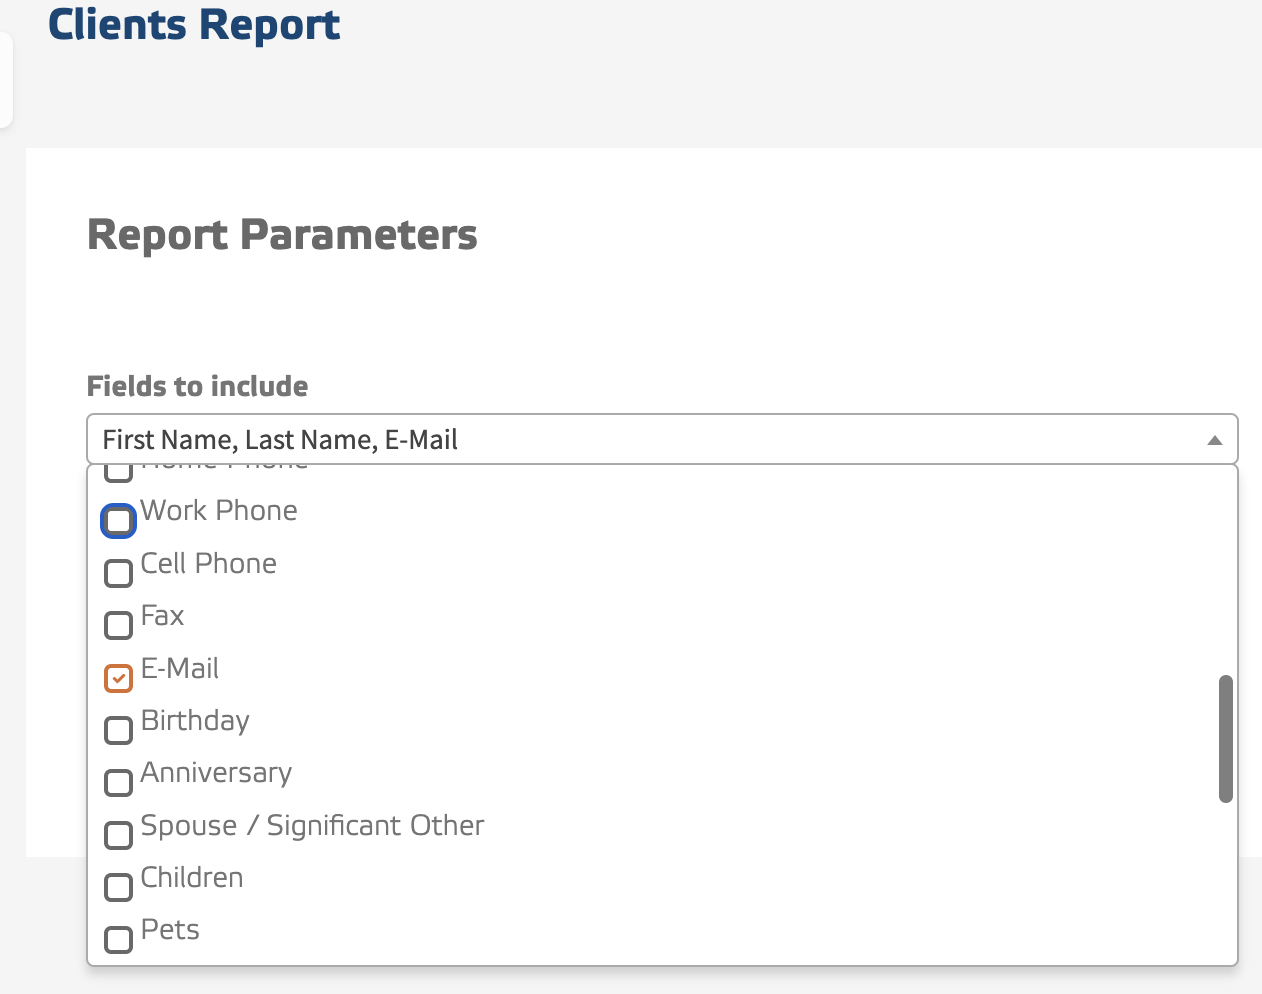 clients-report-parameters.png